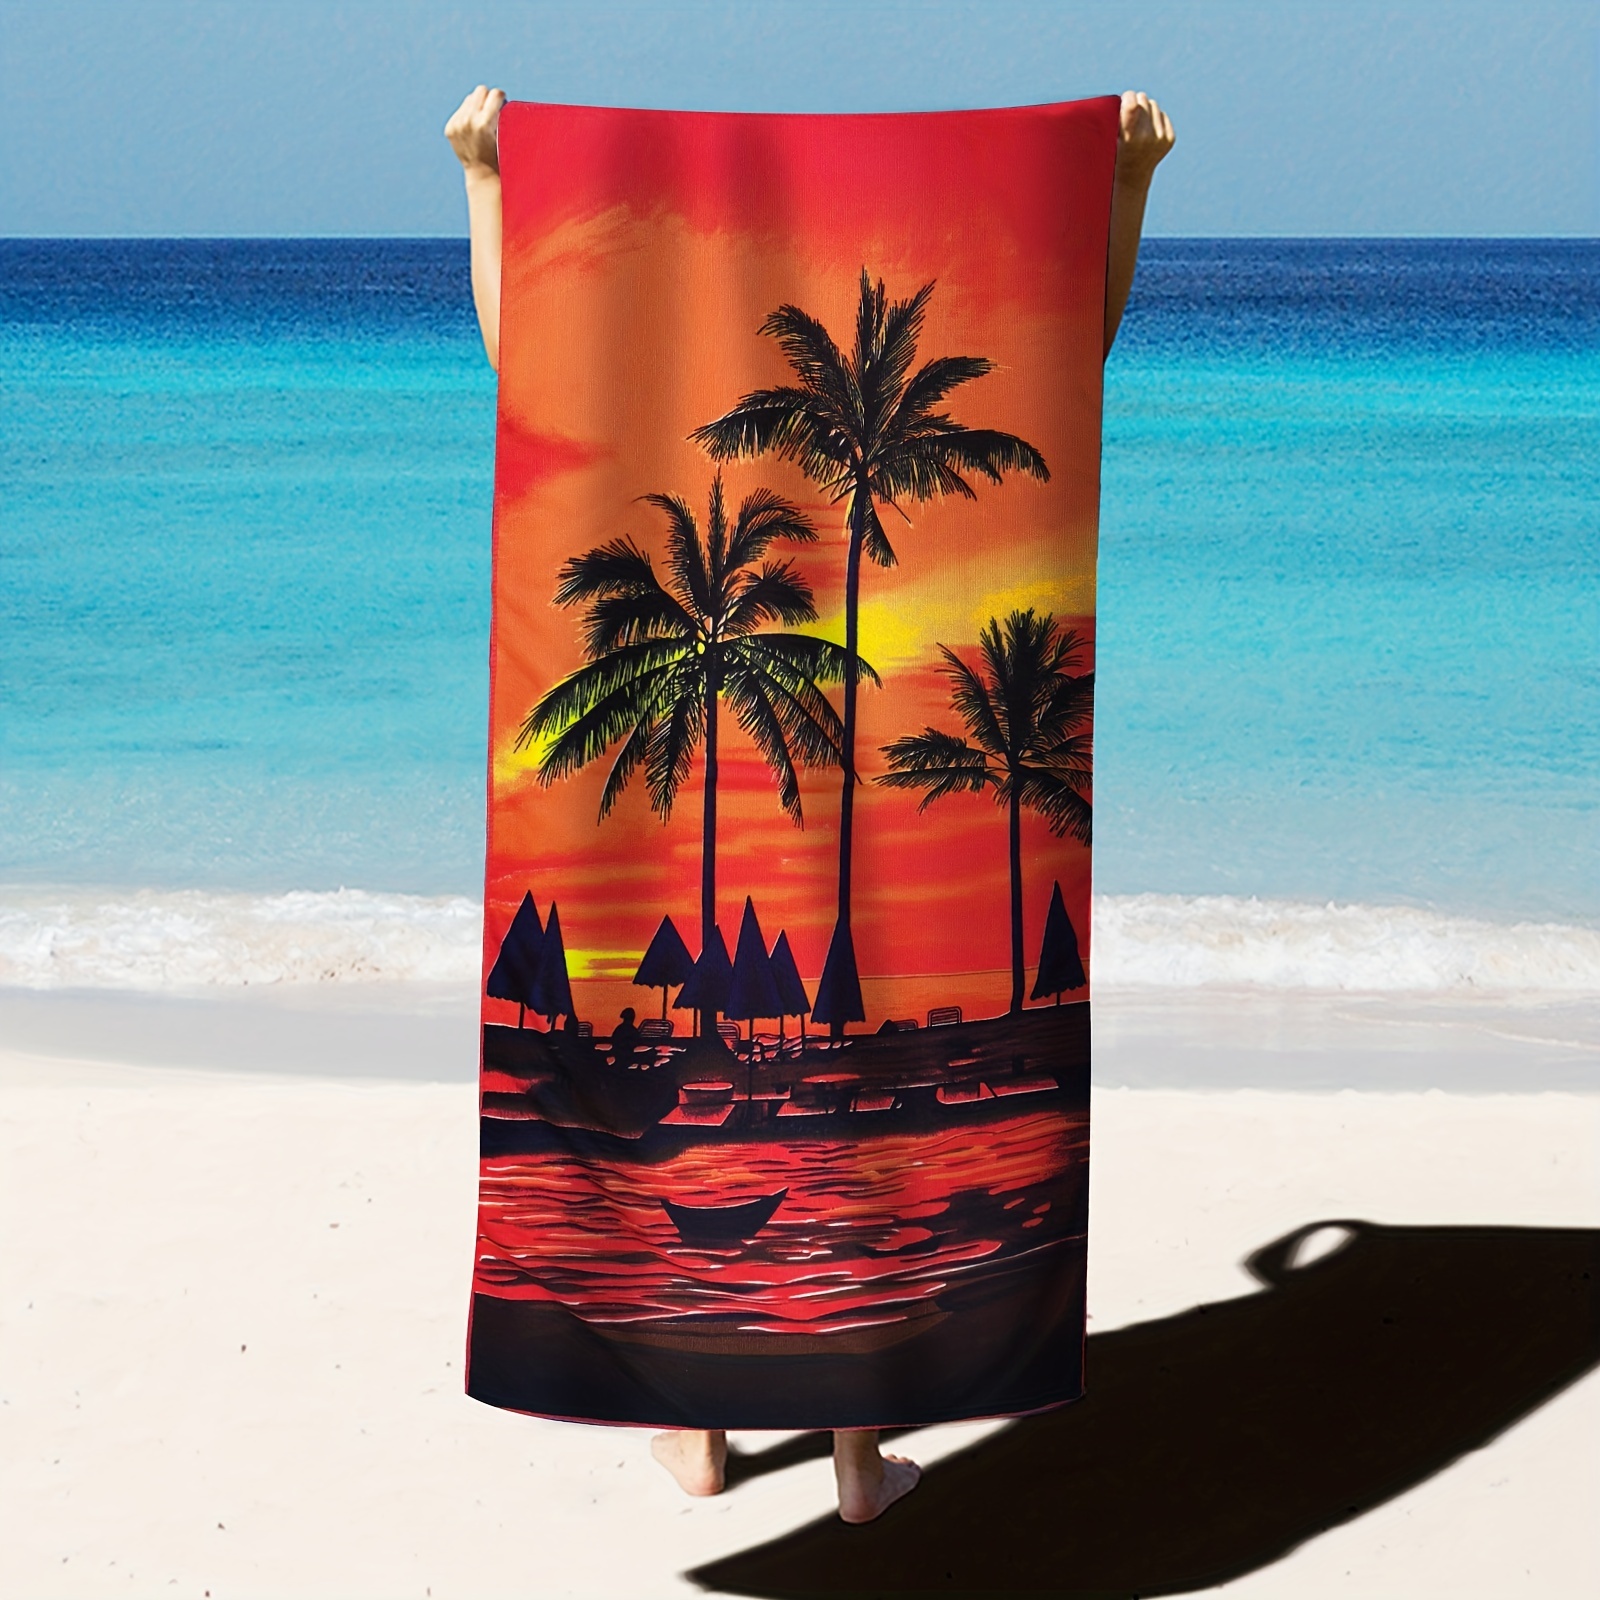 Mutao Beach Towel - Quick Dry & Super Soft